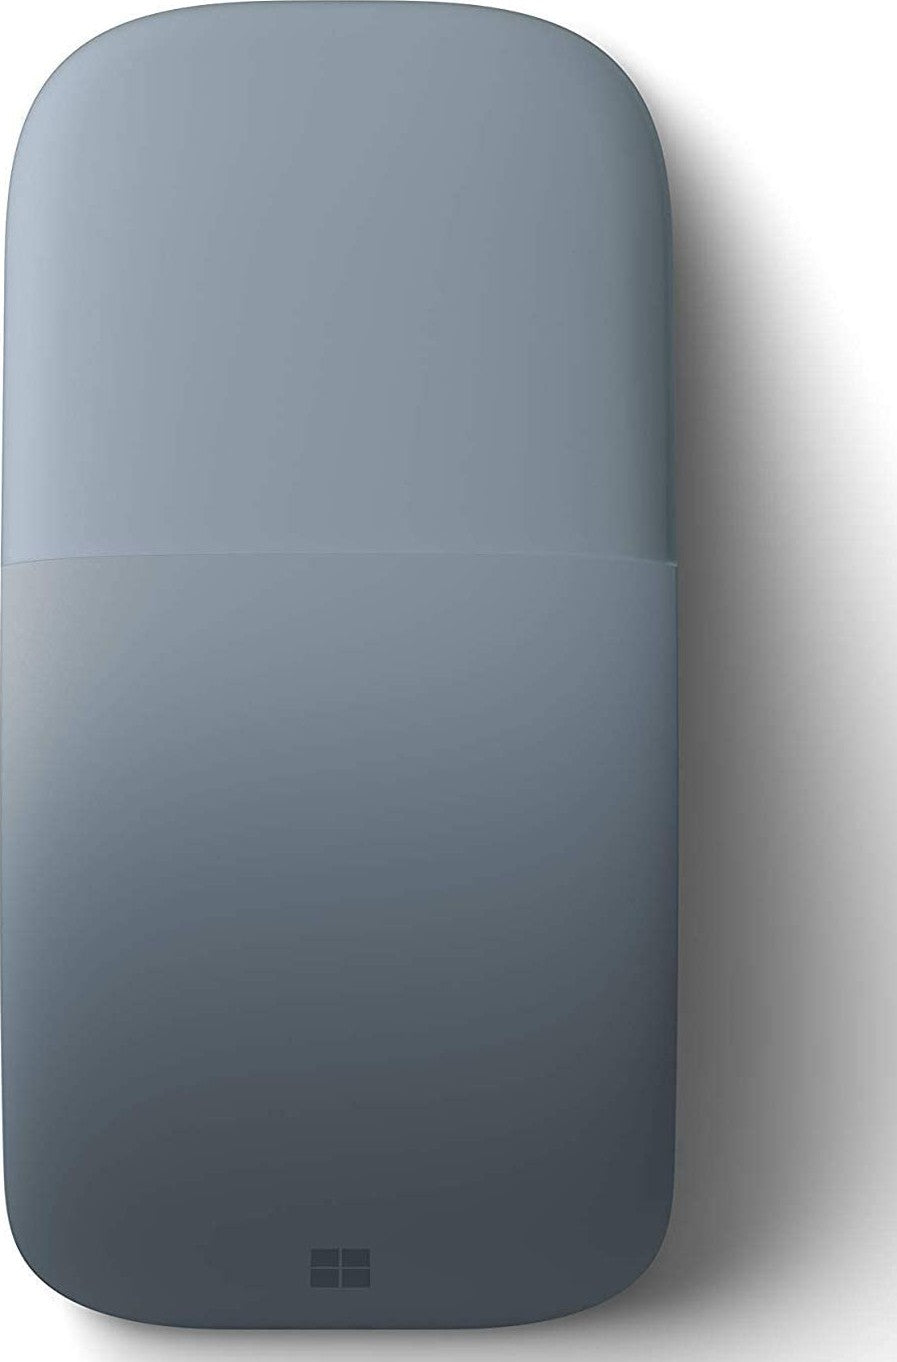 Microsoft Surface Wireless Arc Mouse | Ultra-slim & Lightweight | Ice Blue